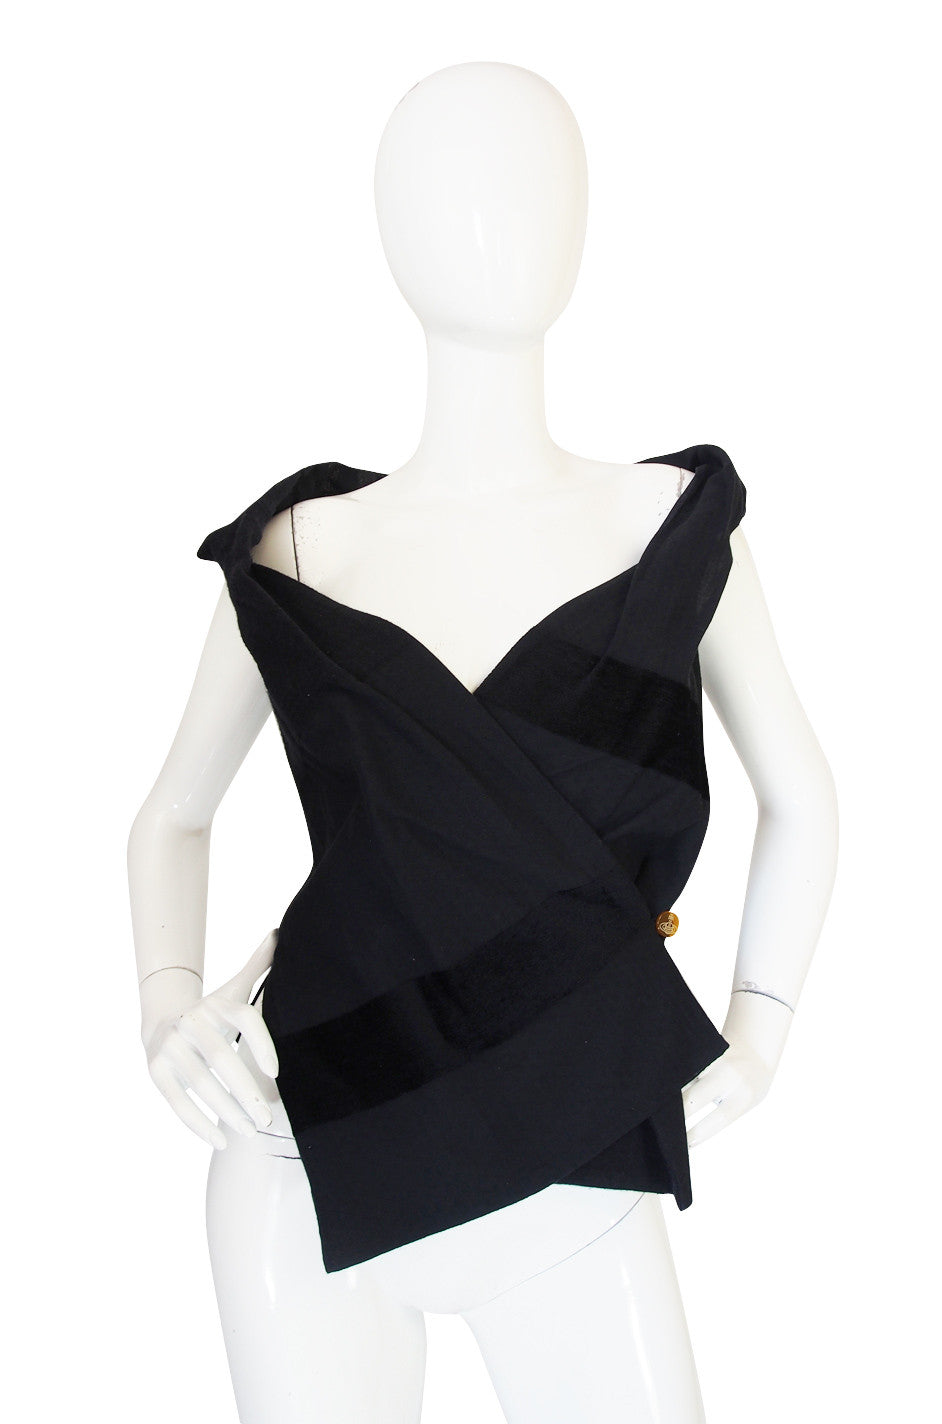 Early 2000s Vivienne Westwood Corset Top – Shrimpton Couture